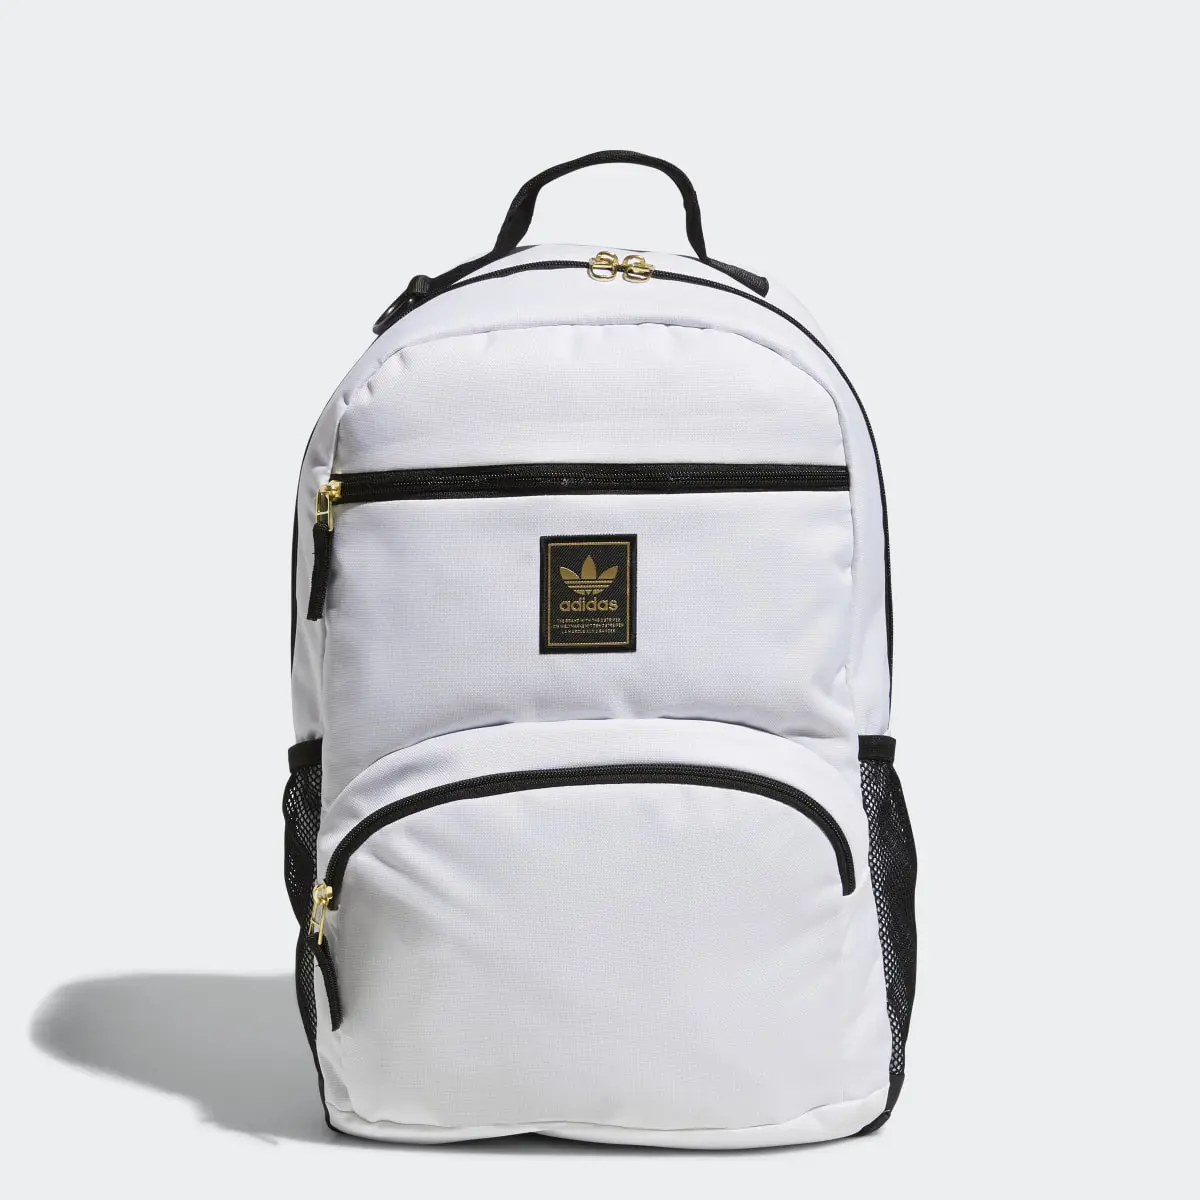 Adidas National Backpack. 1